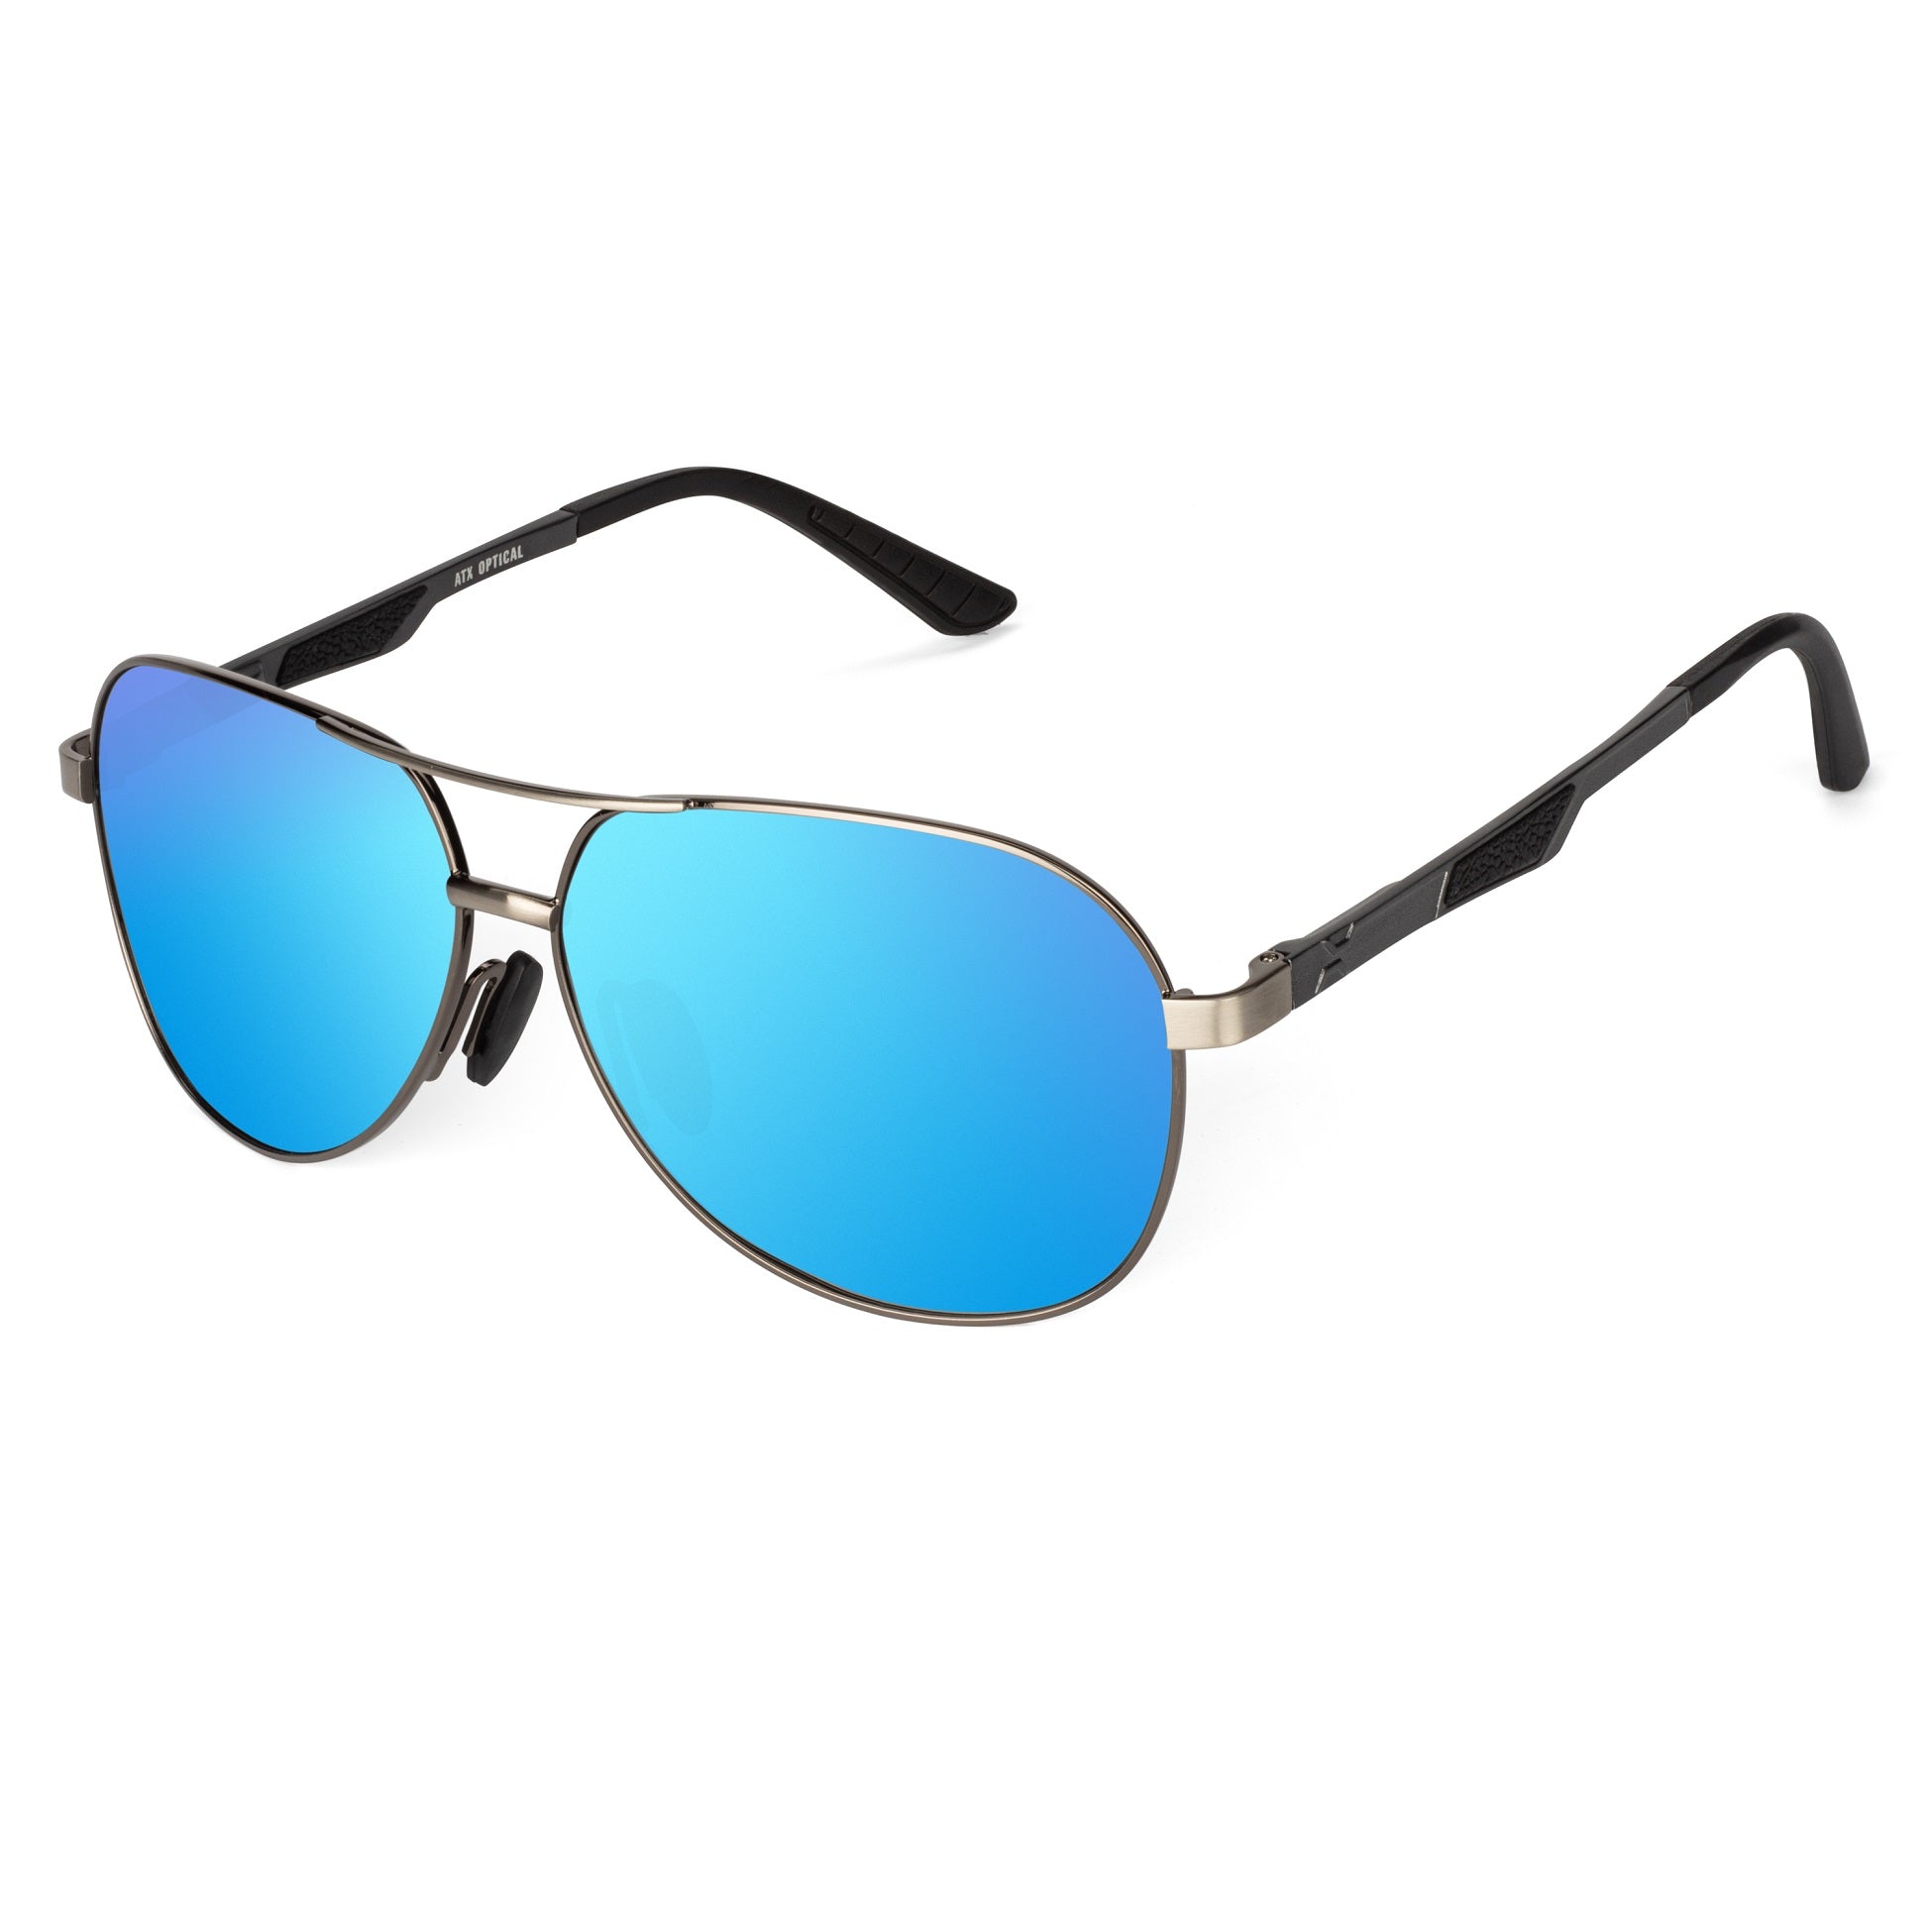 ATX Optical XXL Classic Round Aviator Polarized Sunglasses 150mm Wide Gunmetal / Blue